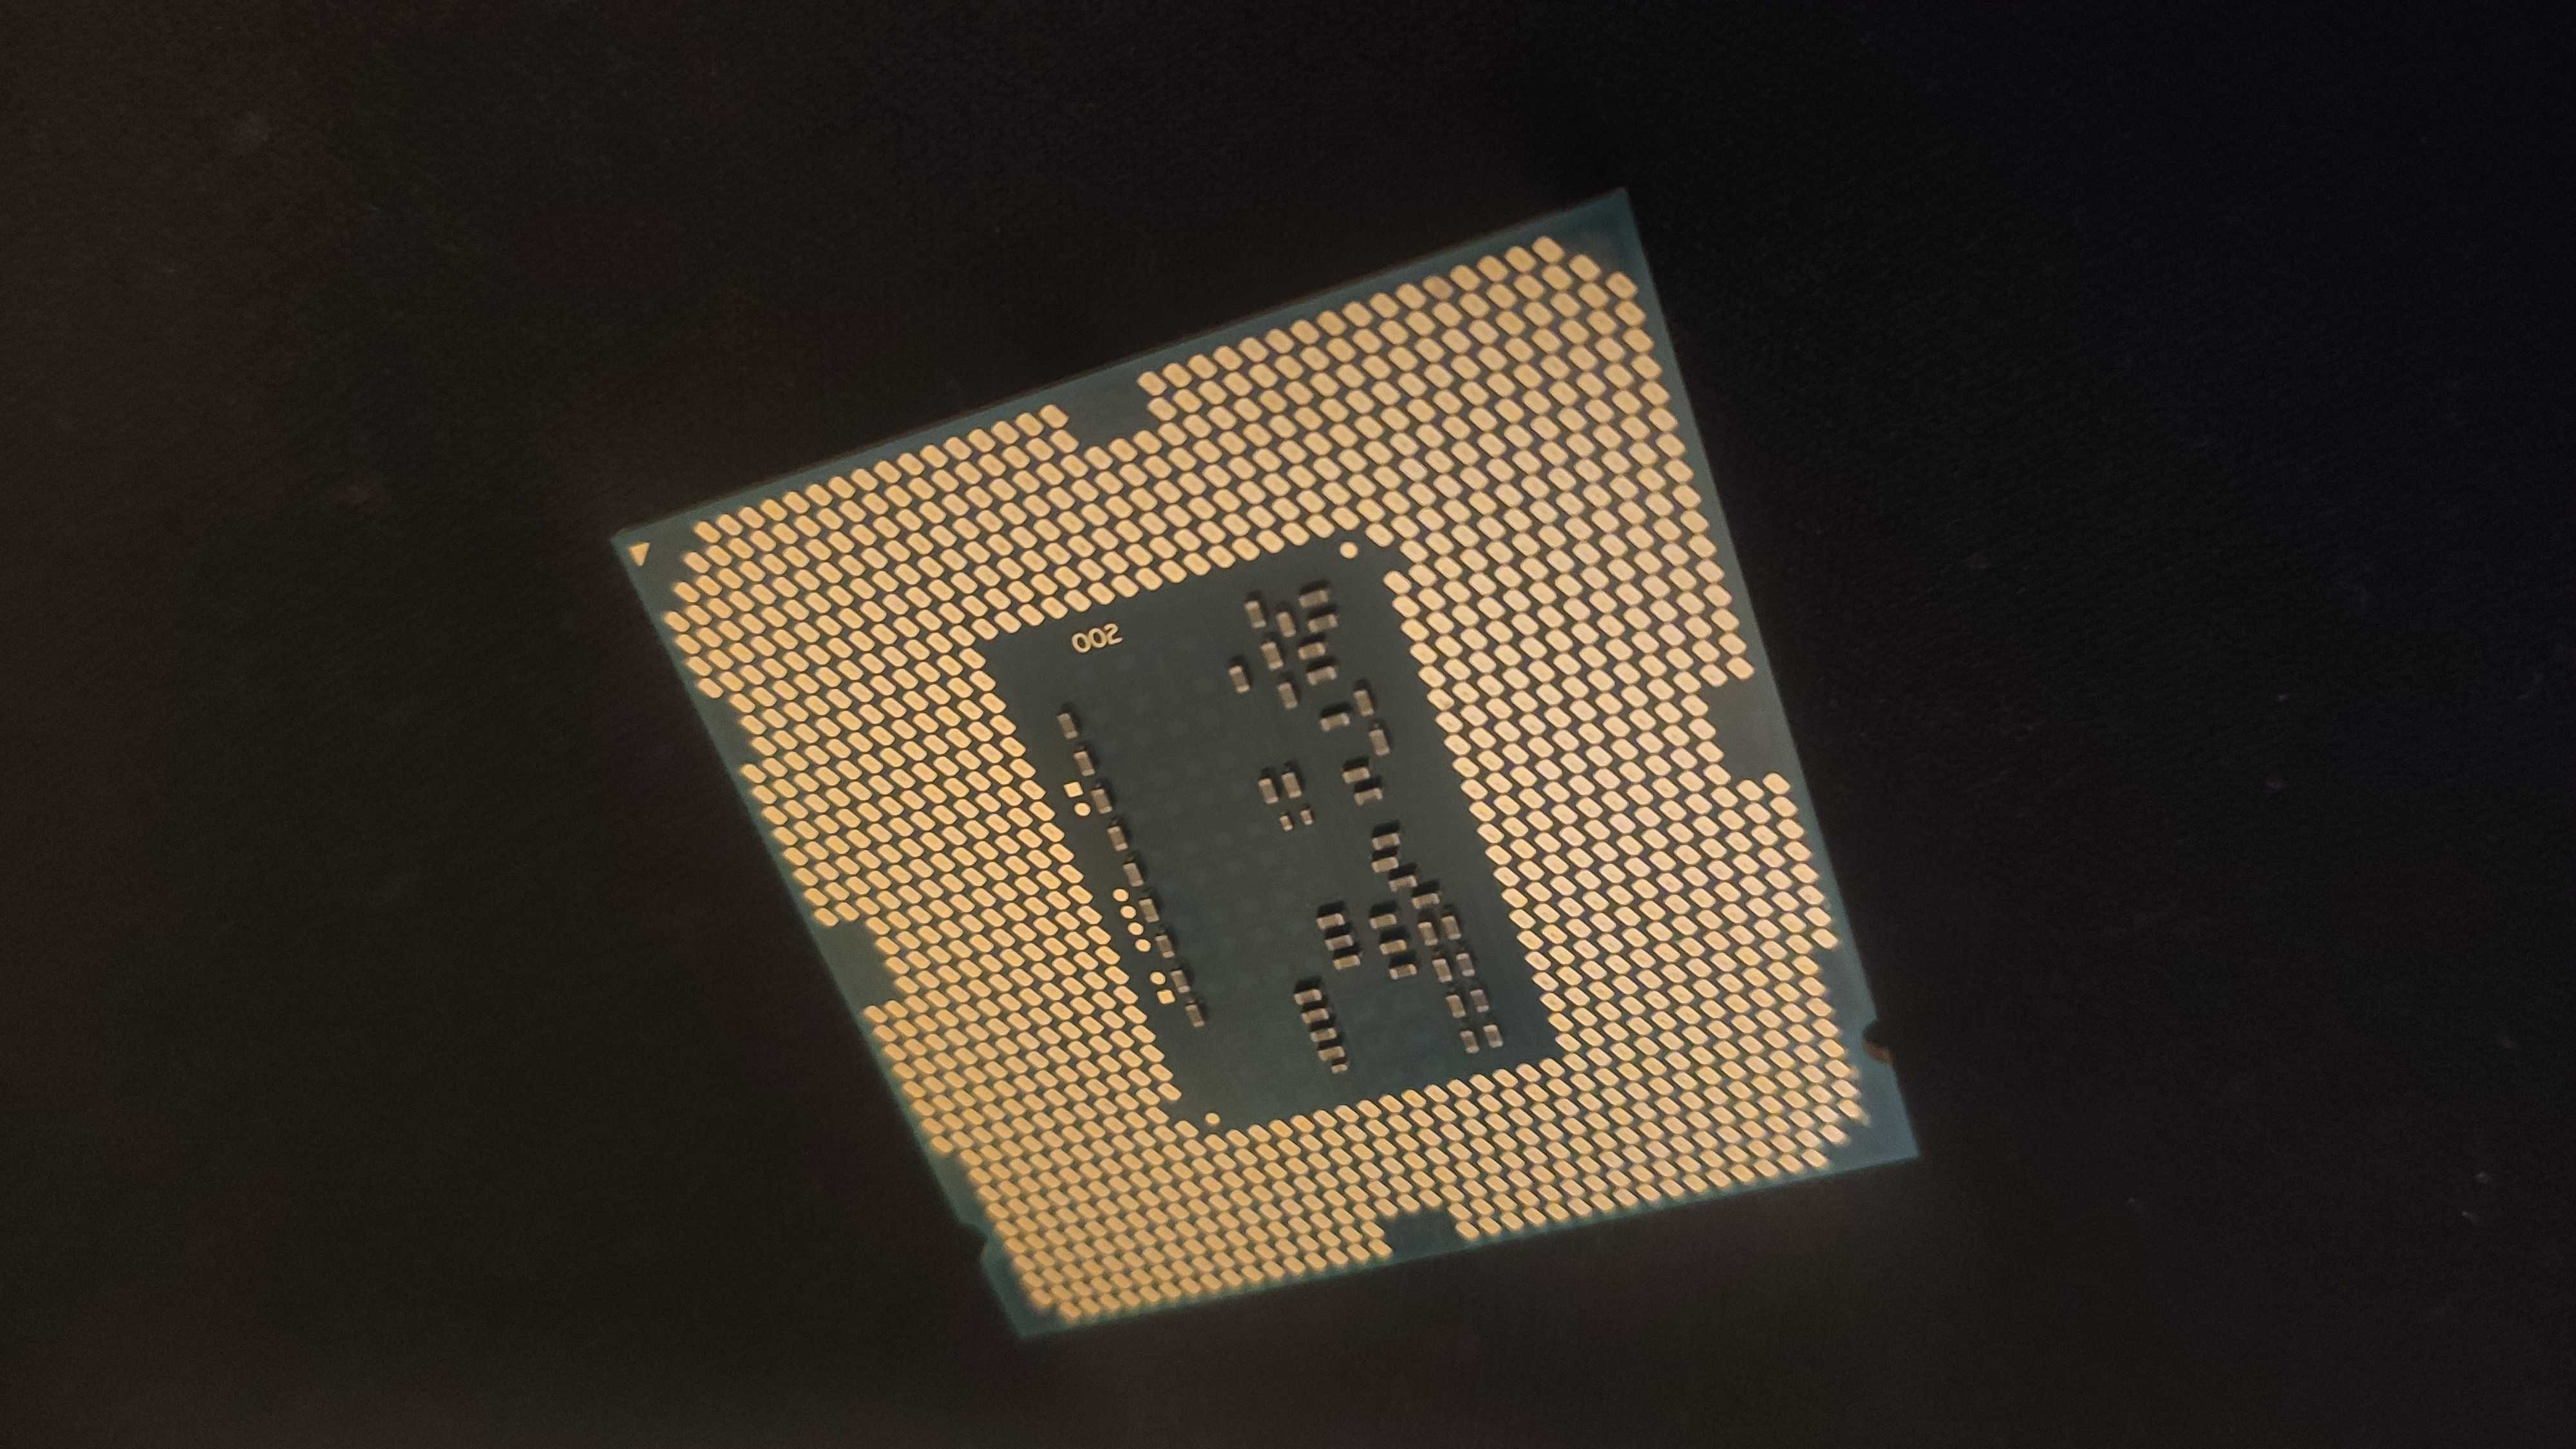 Intel Core i5 4570